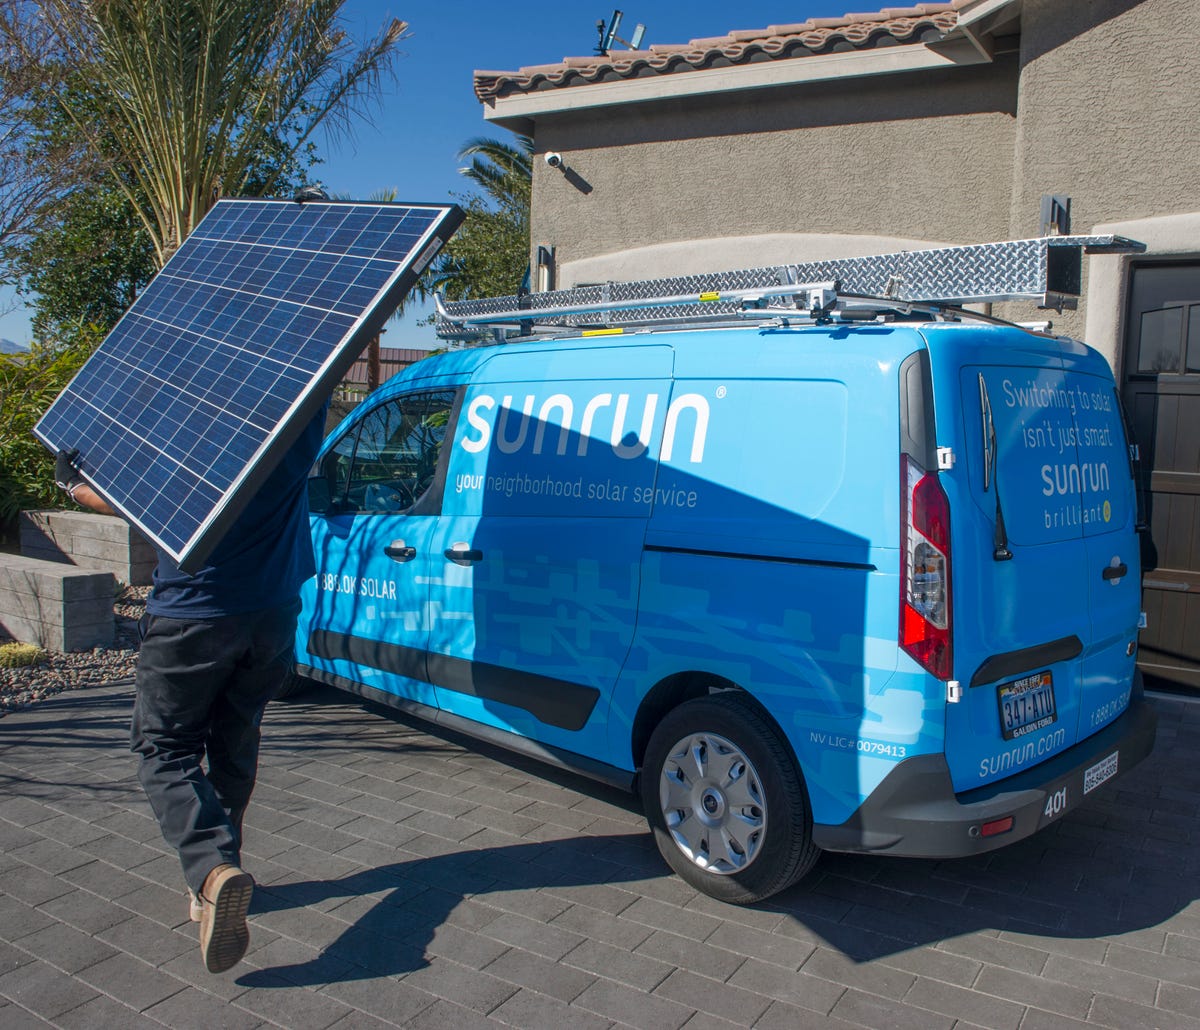 A person carries a solar panel past a blue Sunrun van.